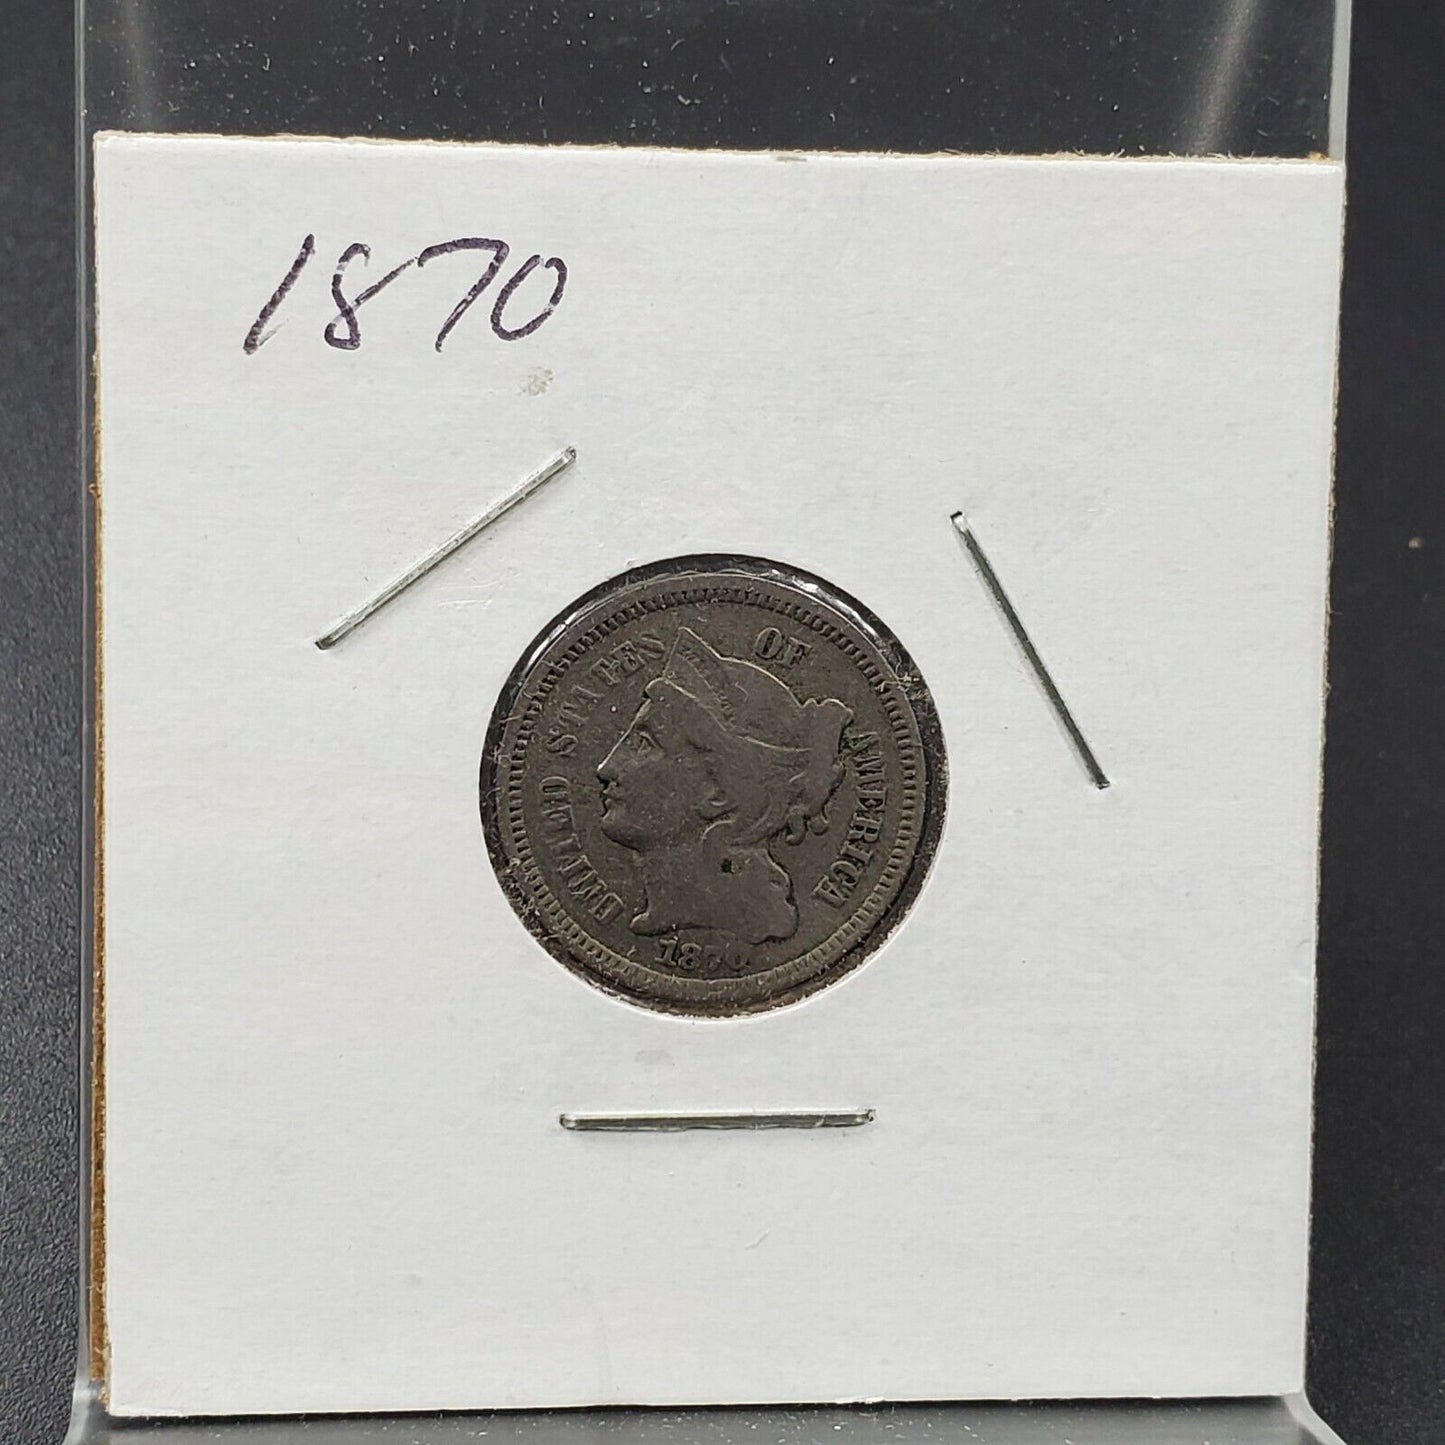 1870 P 3c Liberty Three Cent Nickel Coin Choice Fine Stuck Thru Grease Obverse